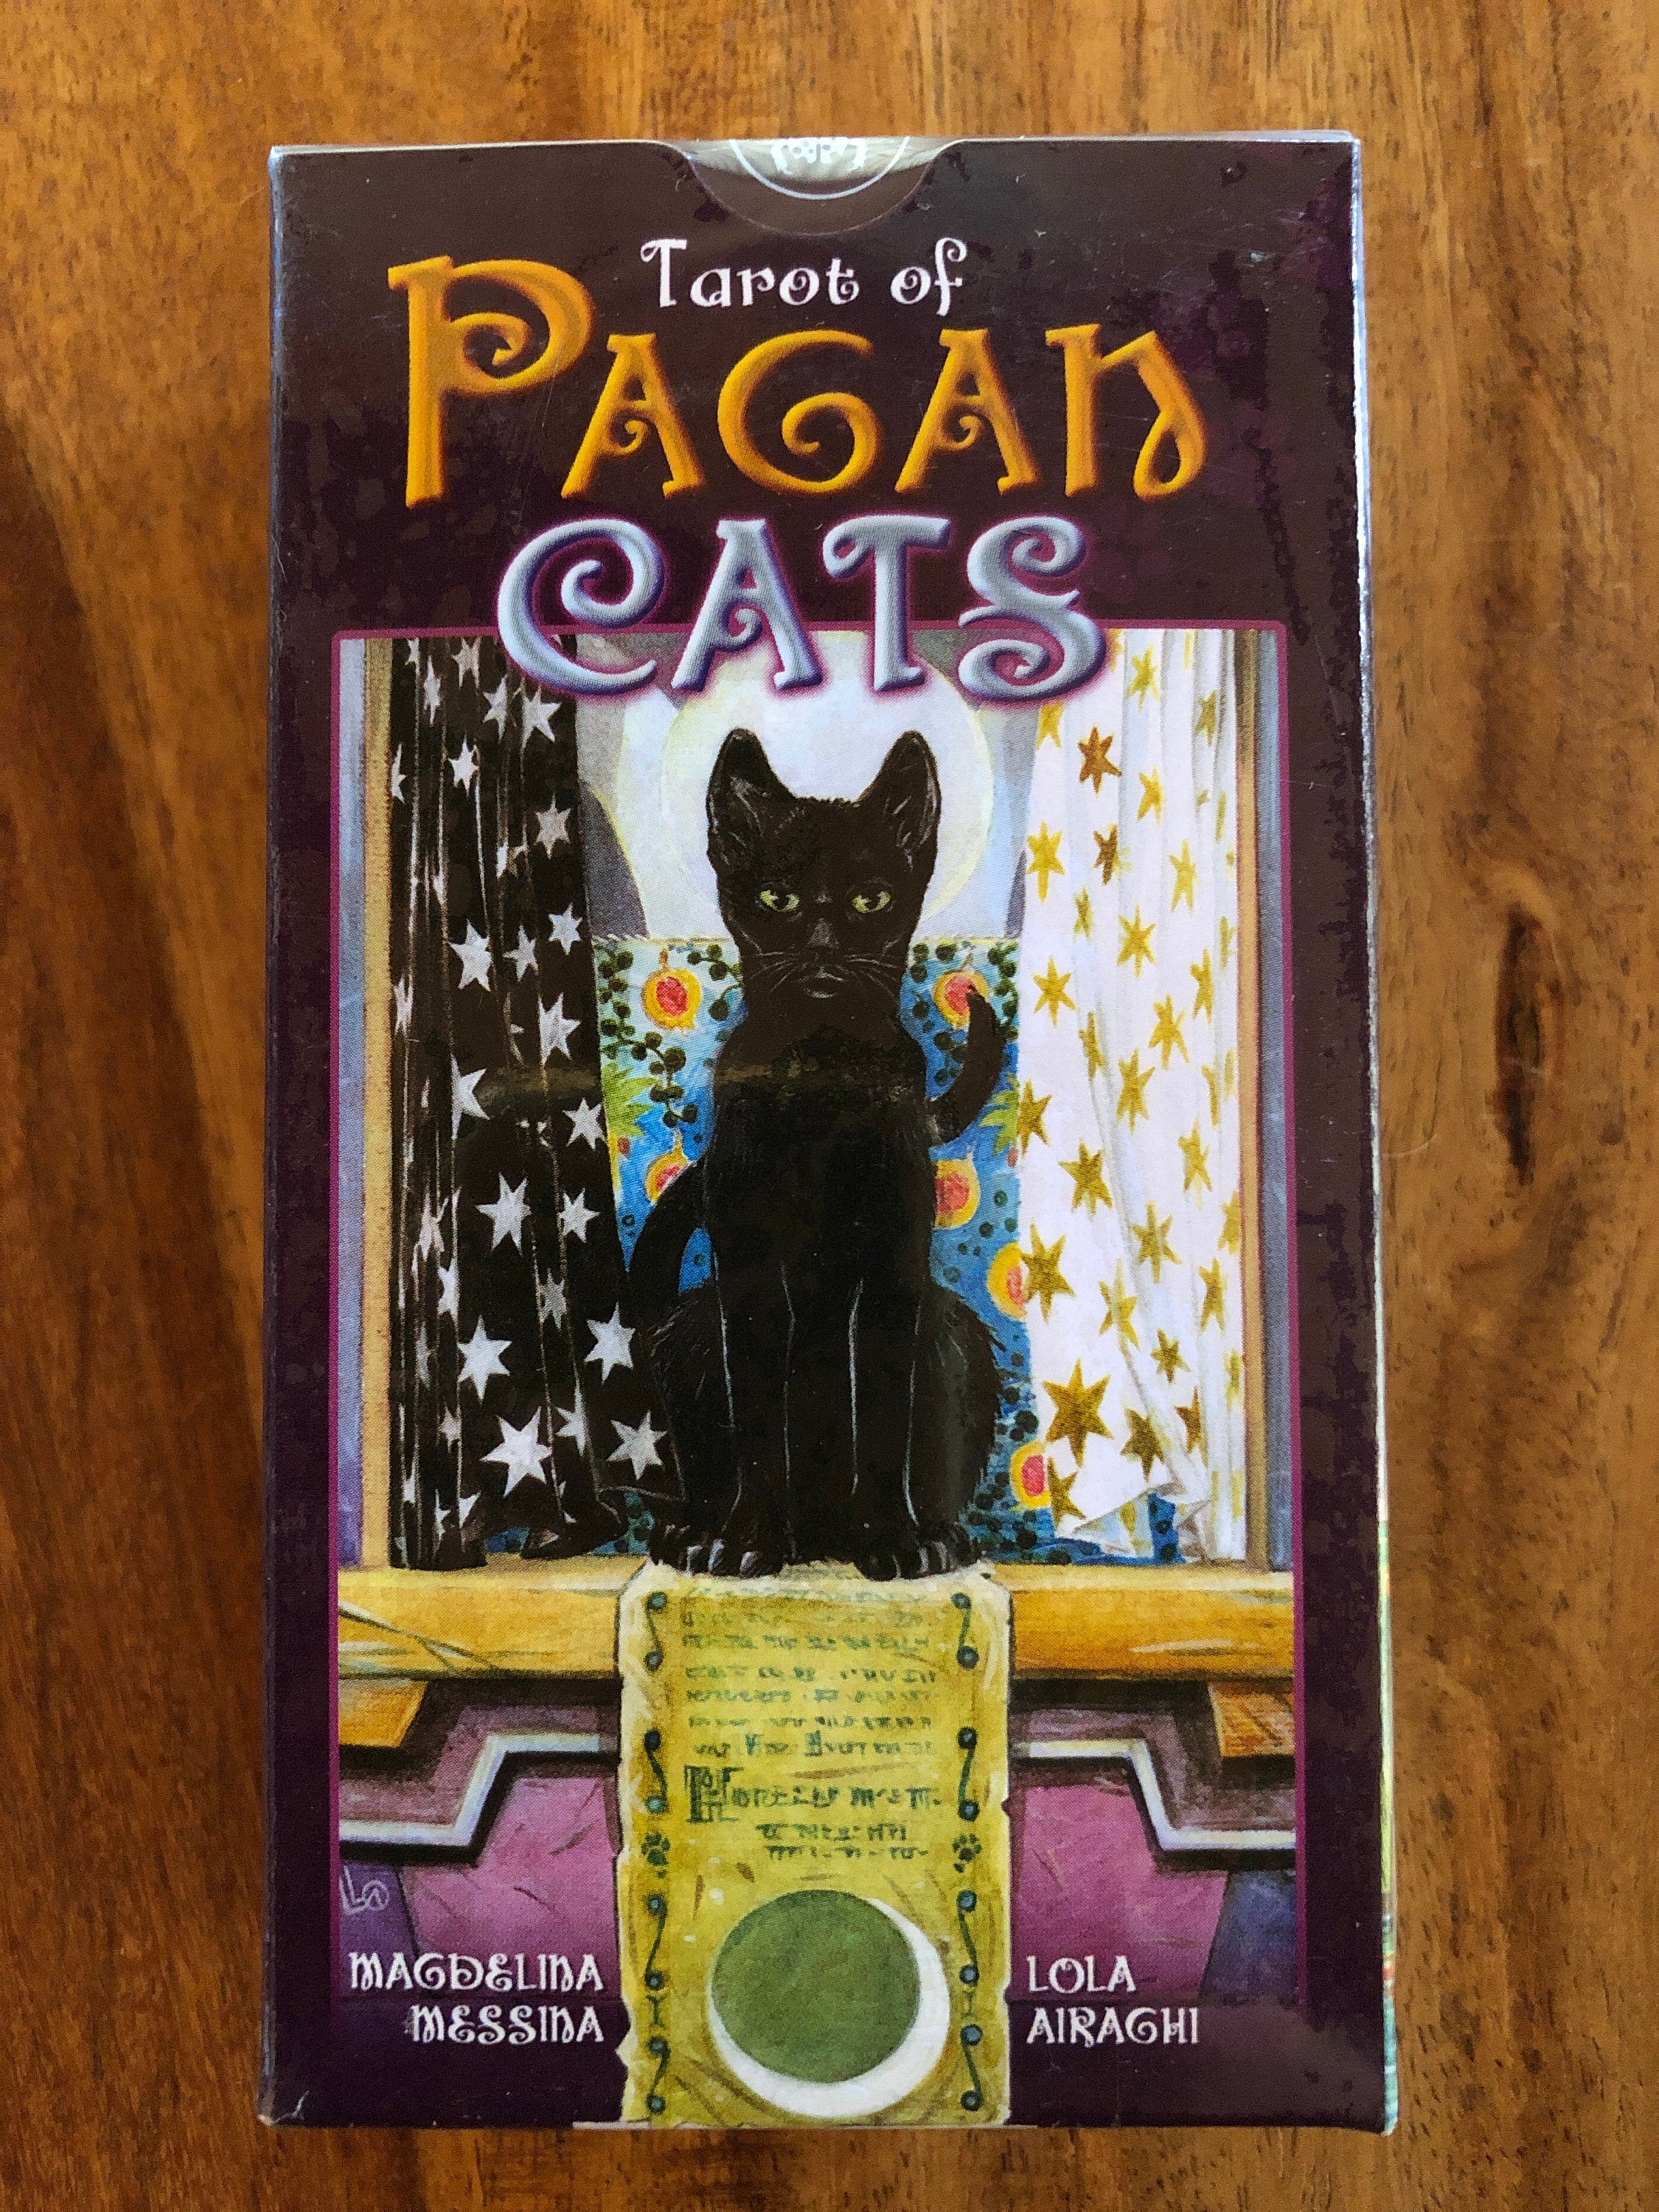 en Katzen 78 Karten Deck Wahrsagen Wicca s Tarot der weis